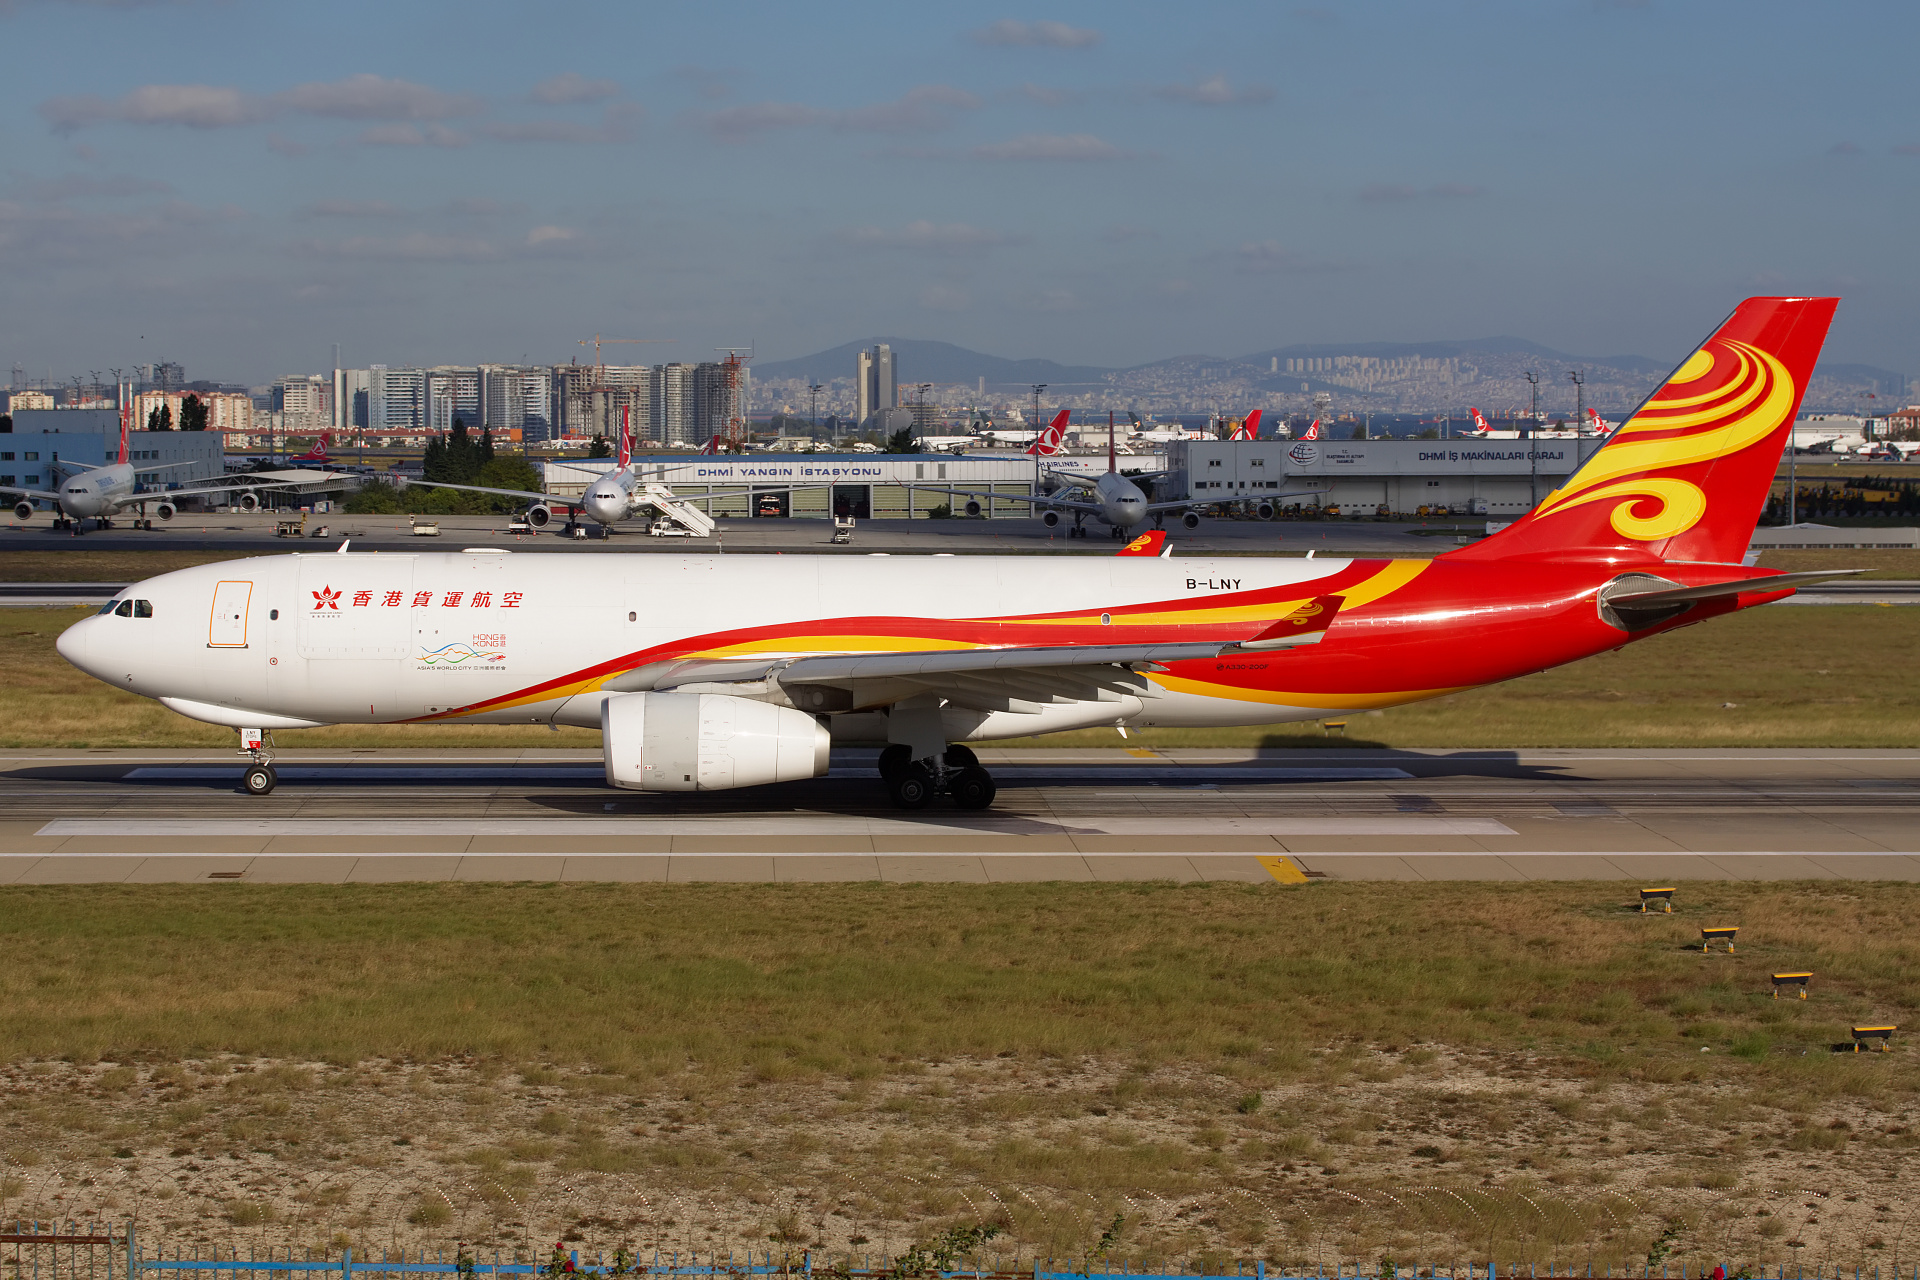 B-LNY, Hong Kong Air Cargo (Samoloty » Port Lotniczy im. Atatürka w Stambule » Airbus A330-200F)